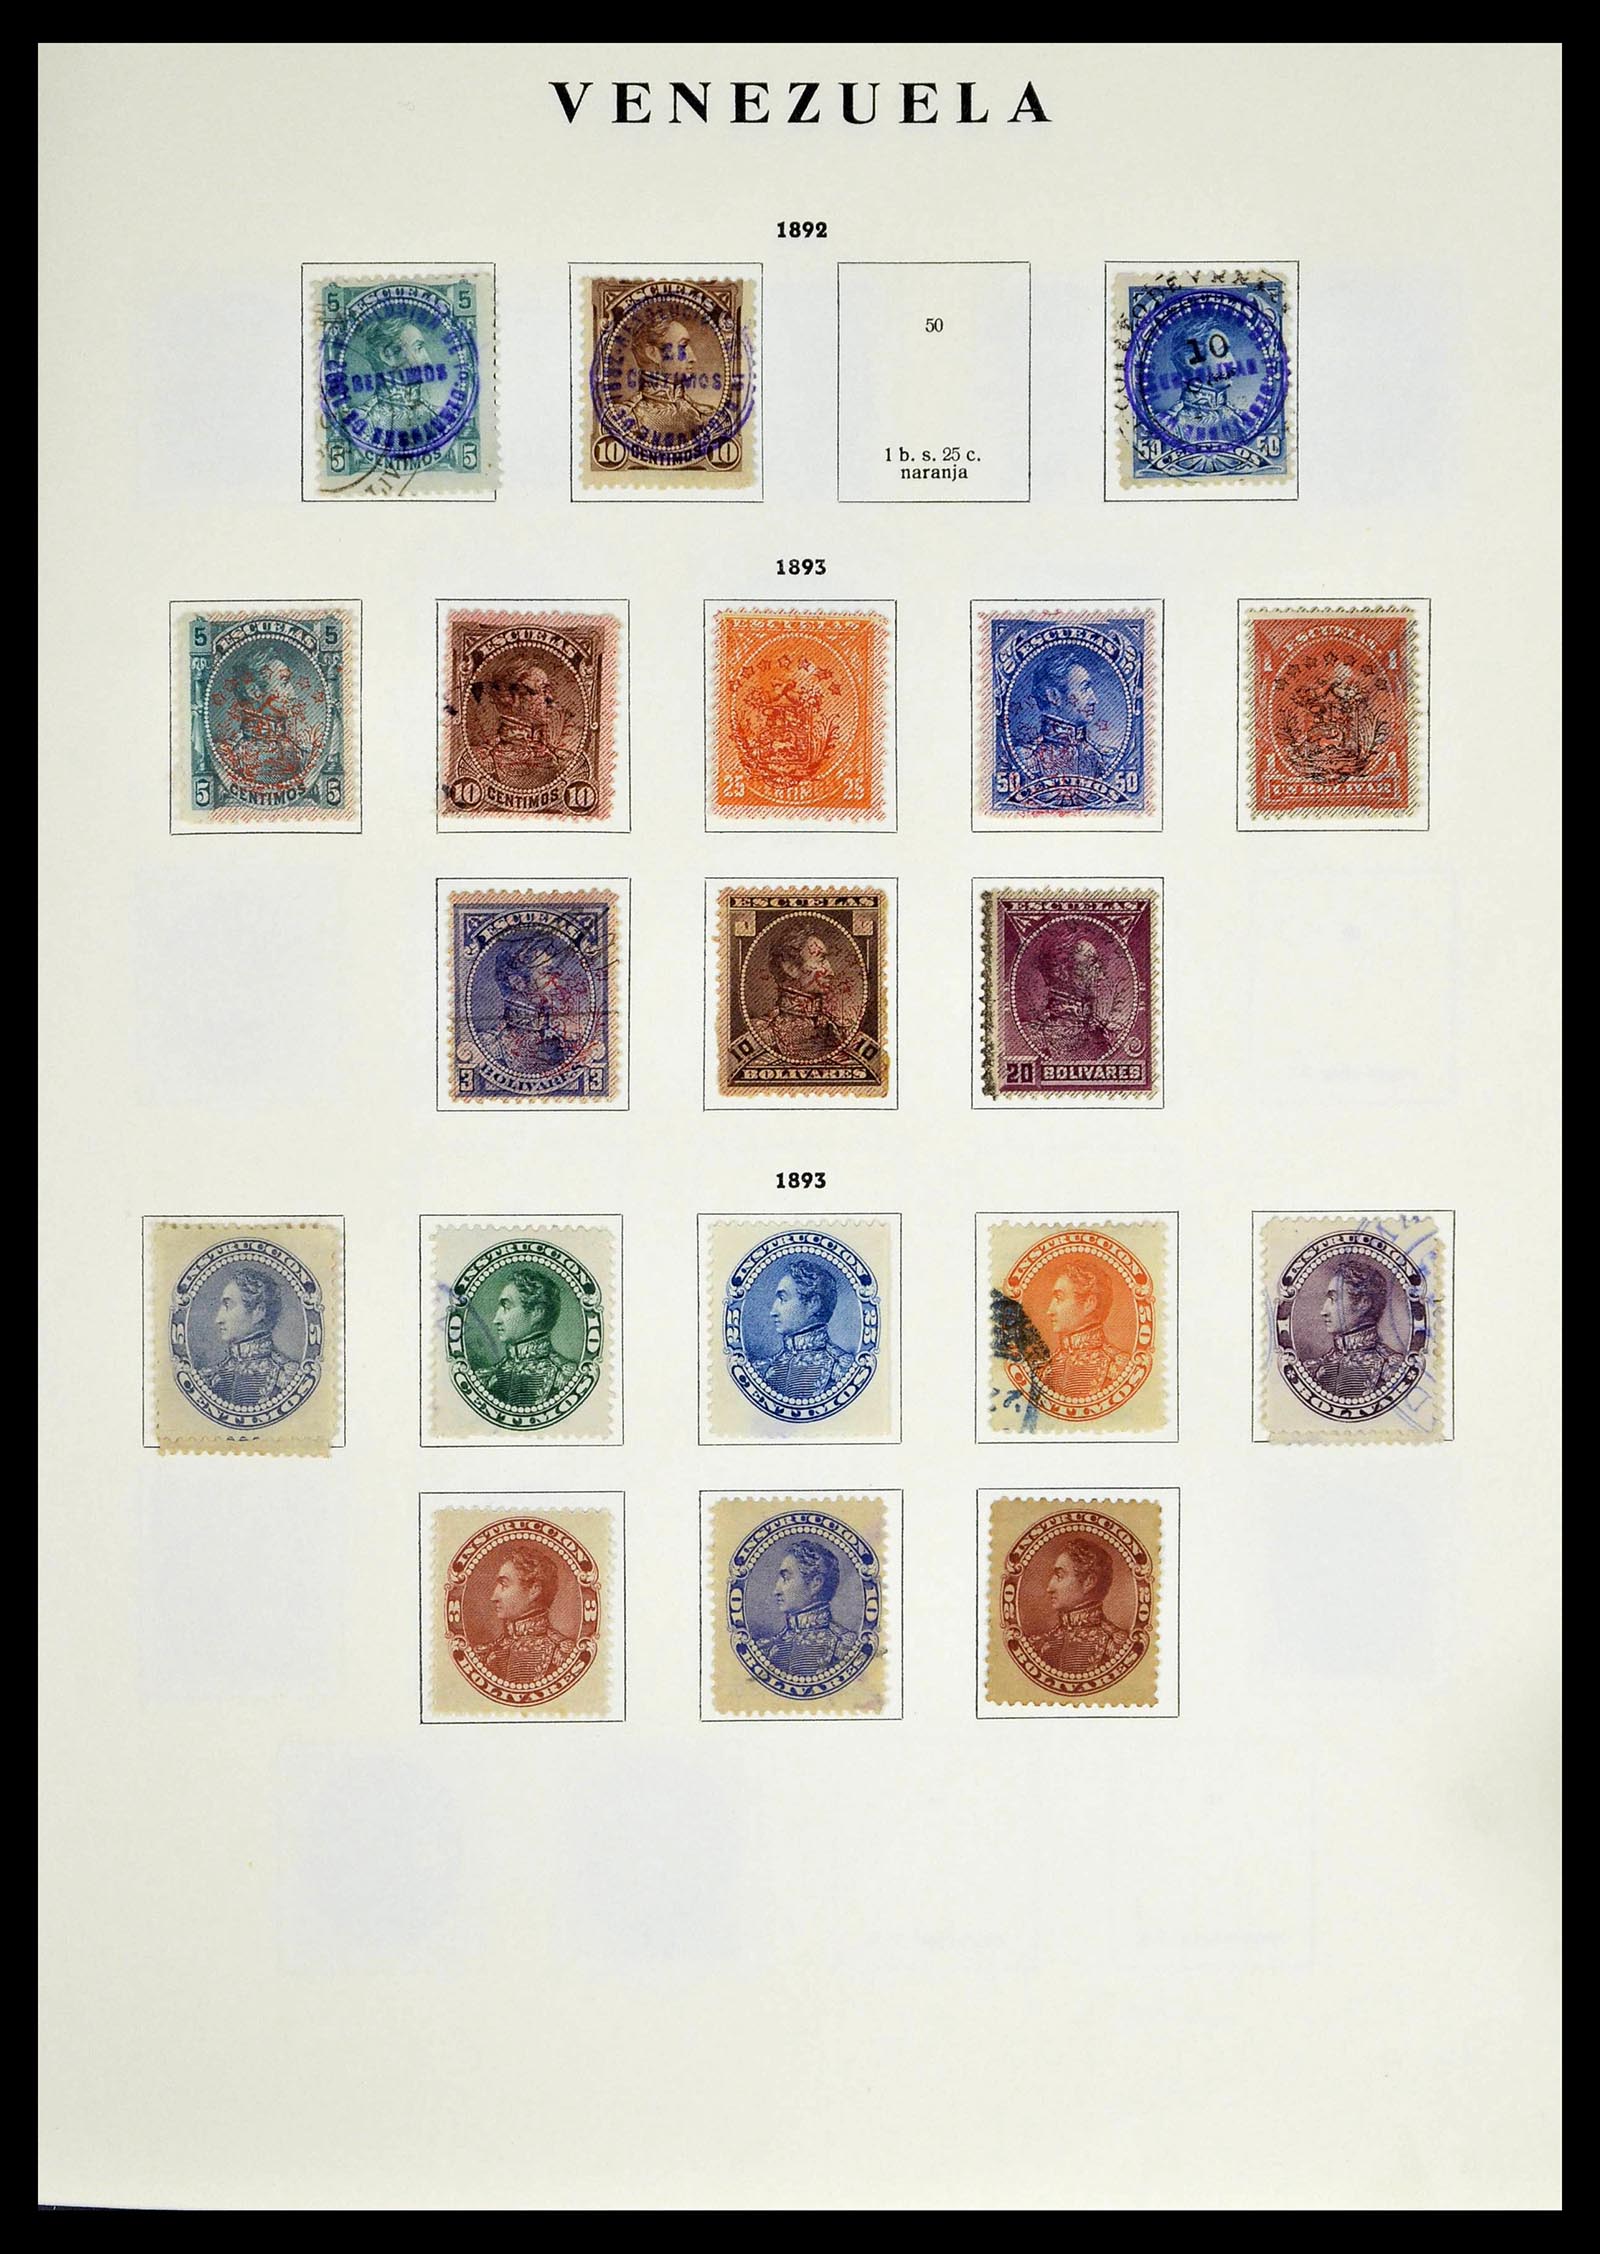 39223 0211 - Stamp collection 39223 Venezuela 1859-1984.